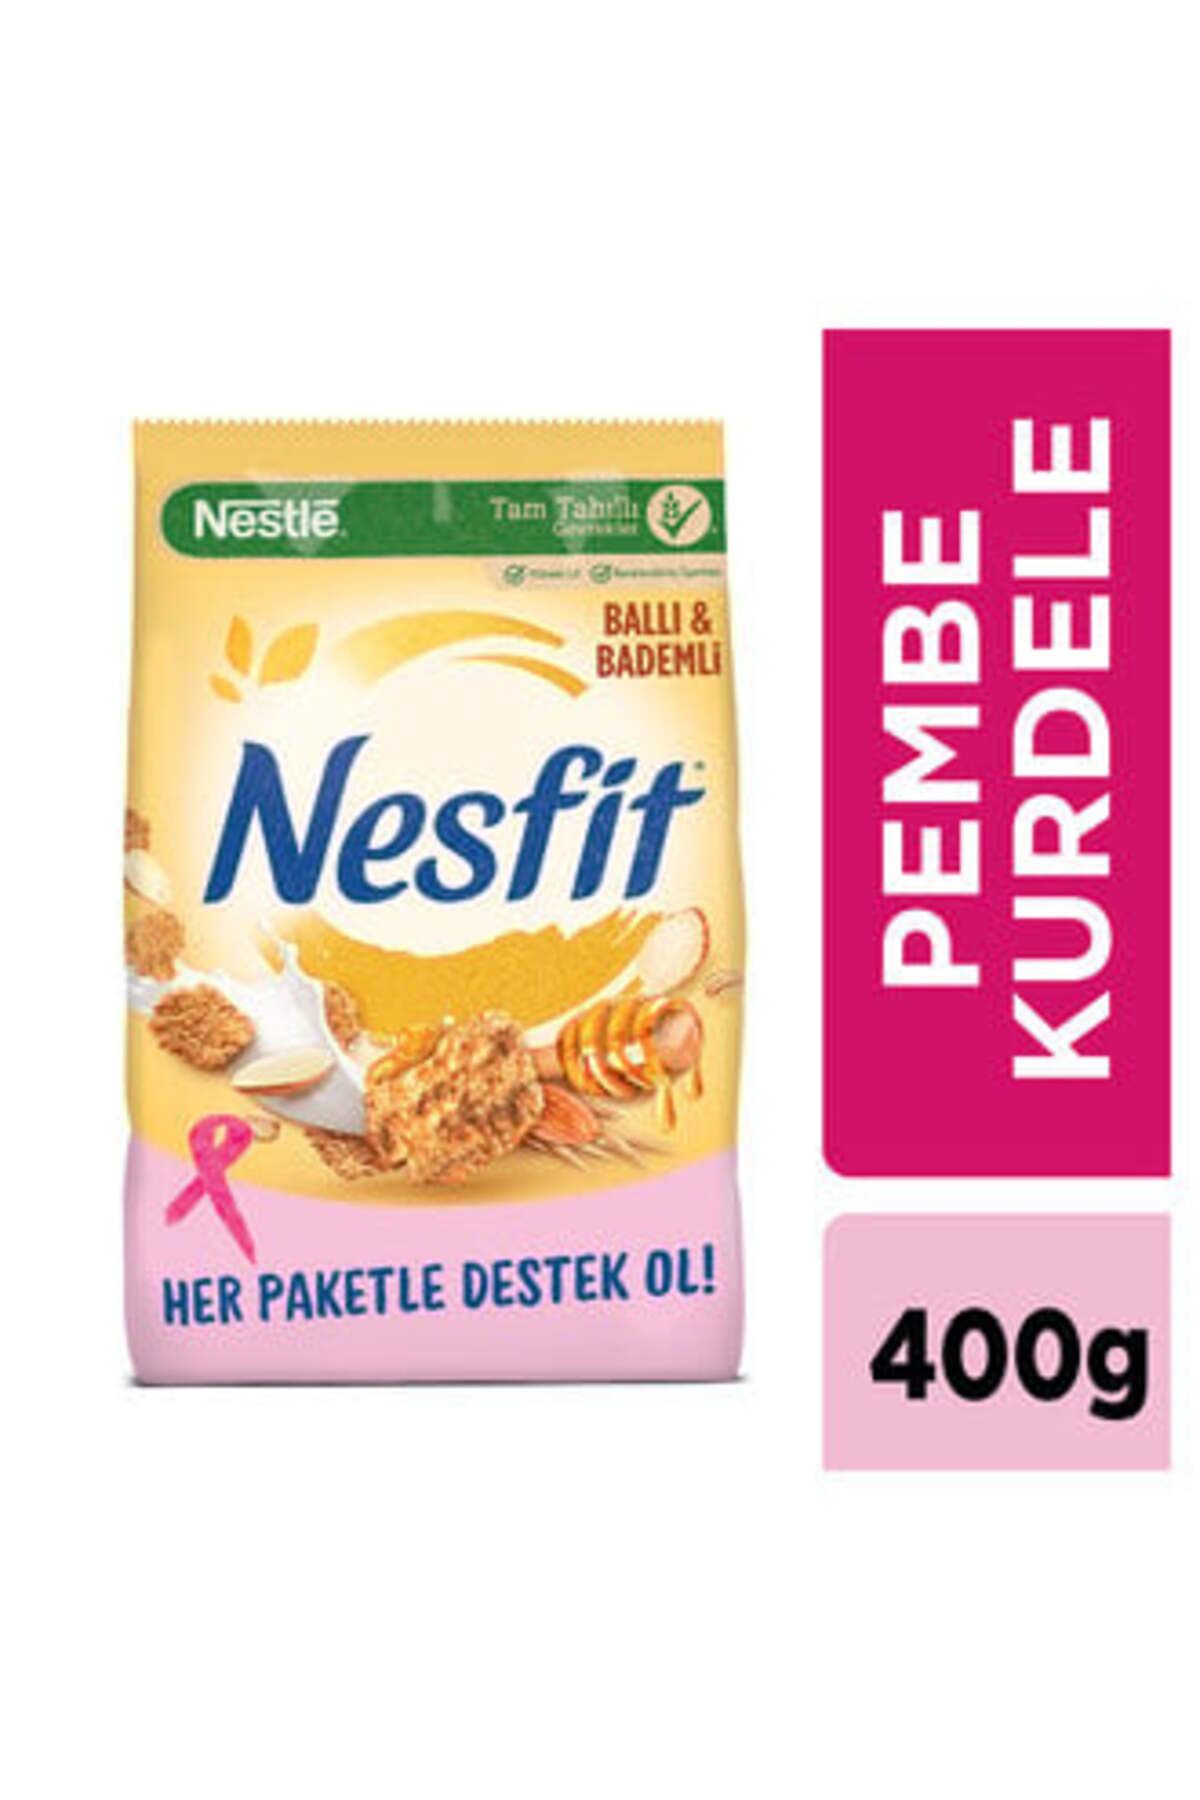 Nestle Ballı Bademli 400 Gr ( 2 ADET )